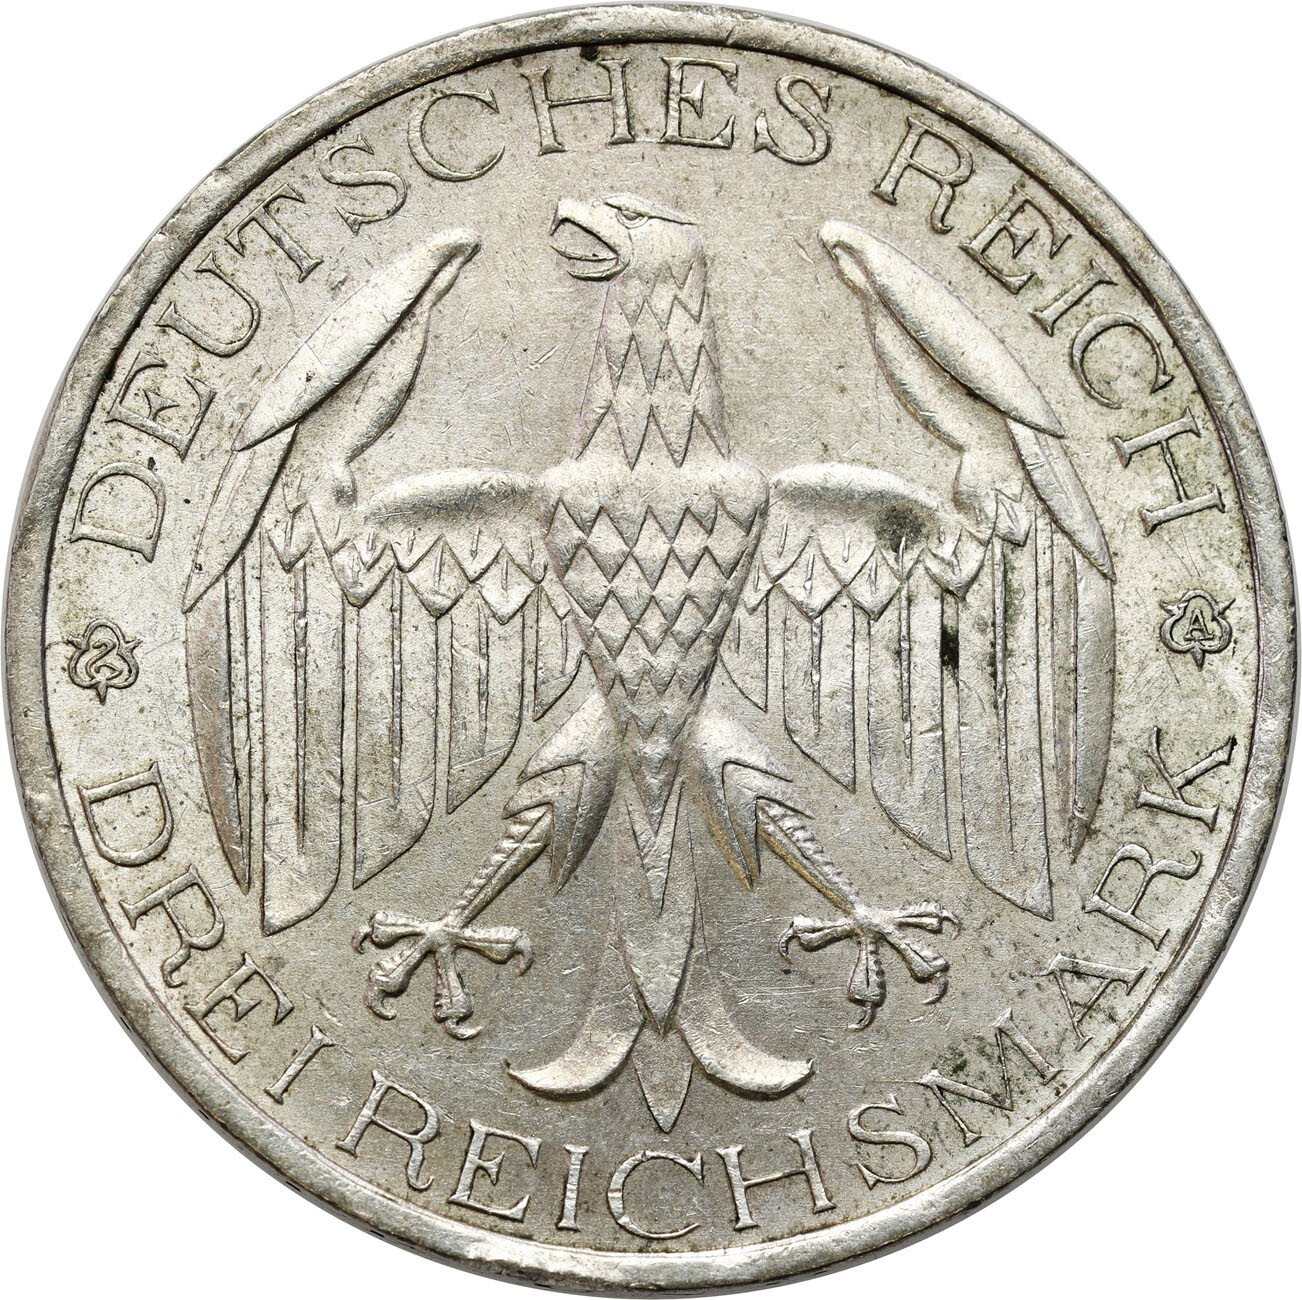 Niemcy, Republika Weimarska. 3 marki 1929, Berlin –ŁADNE